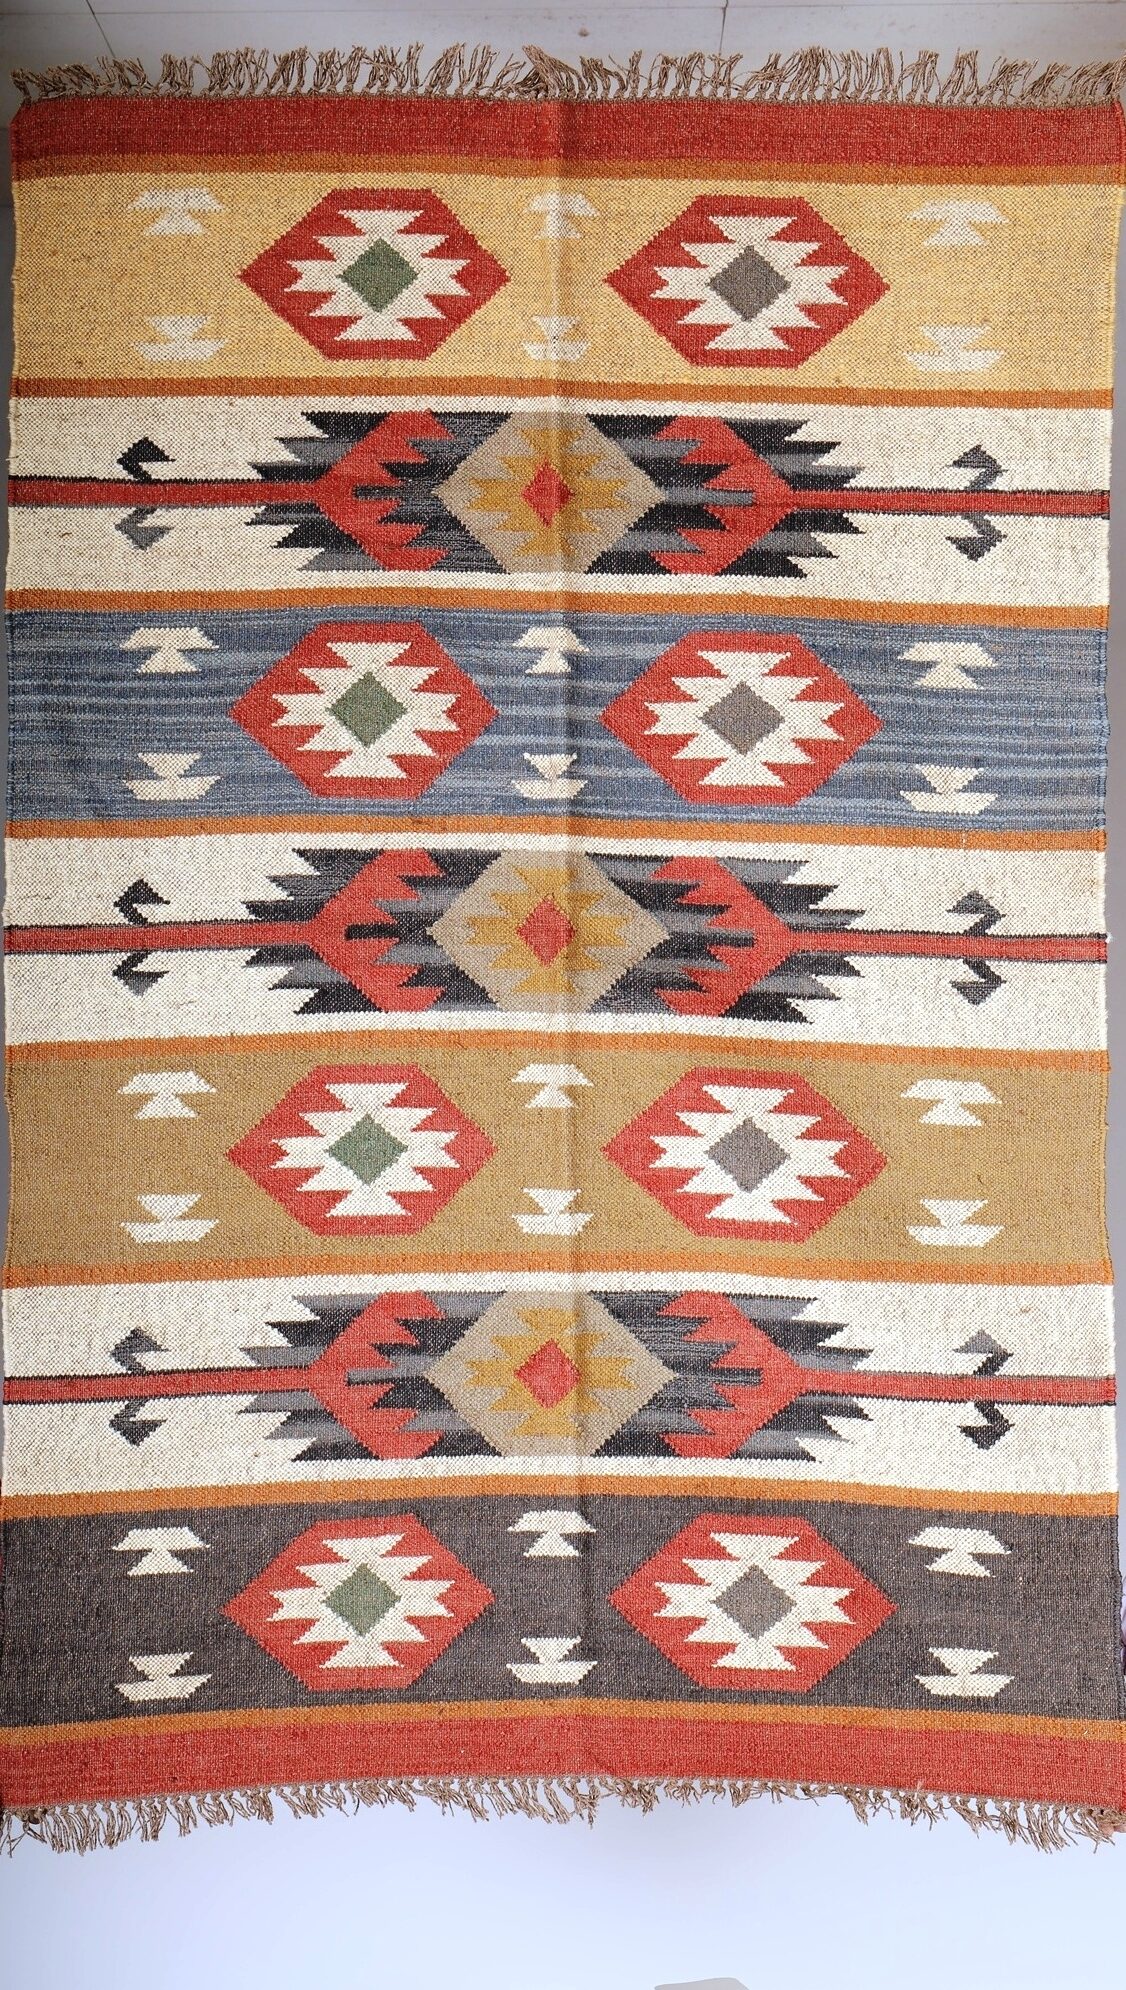 https://tradestarexports.com/wp-content/uploads/2021/03/Indian-Handmade-Jute-Kilim-Rug-Carpet-TS-CR-249-5-1-rotated.jpg